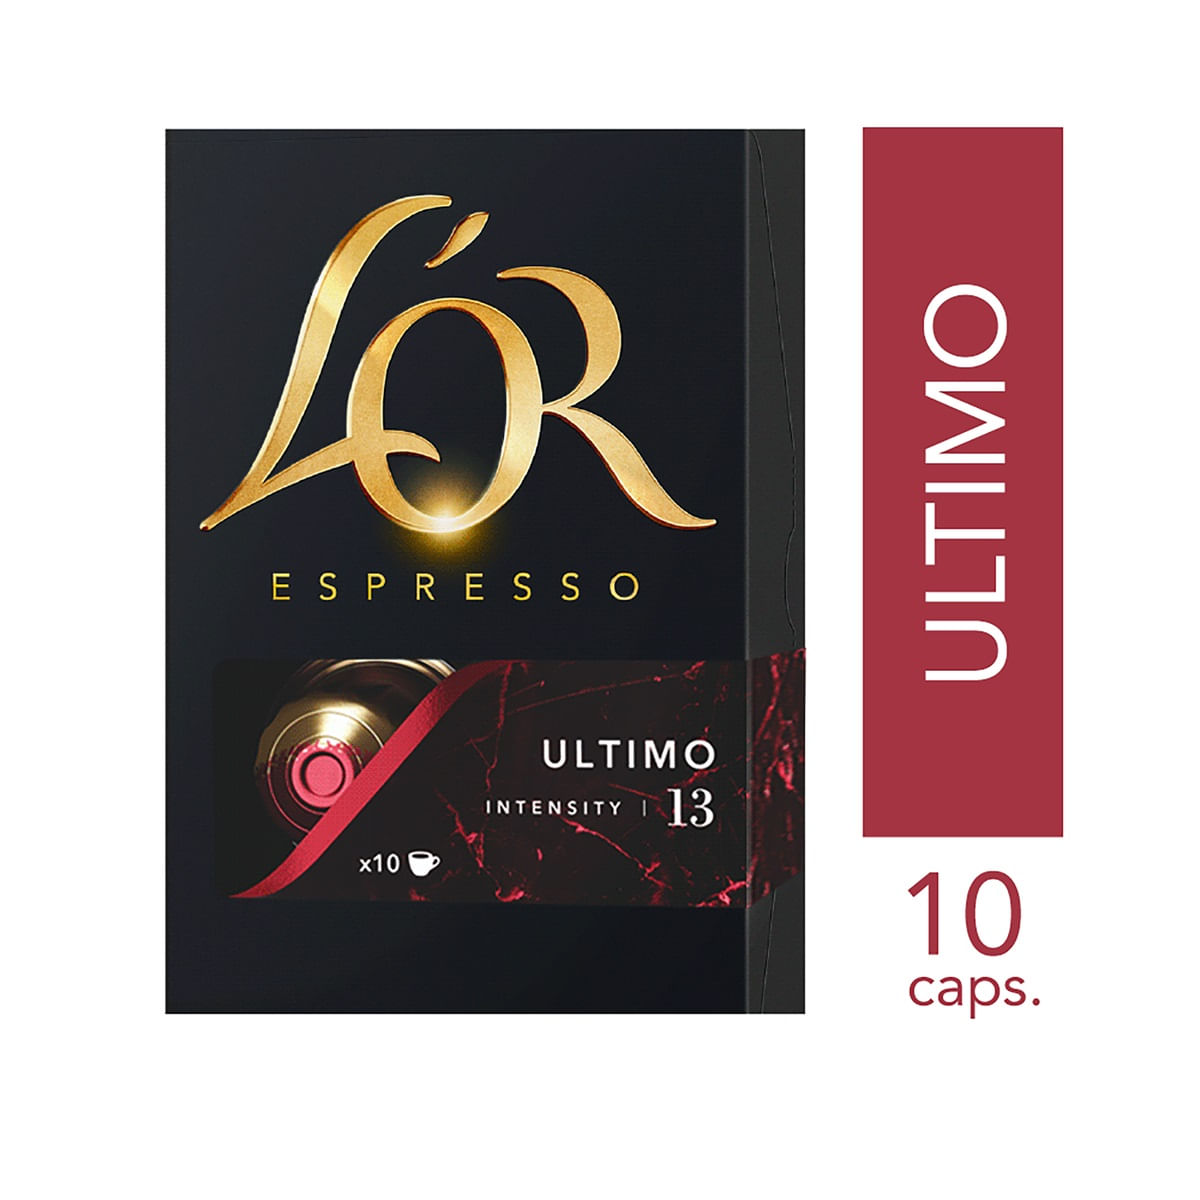 cafe-l'or-capsula-ultimo-10-unidades-1.jpg